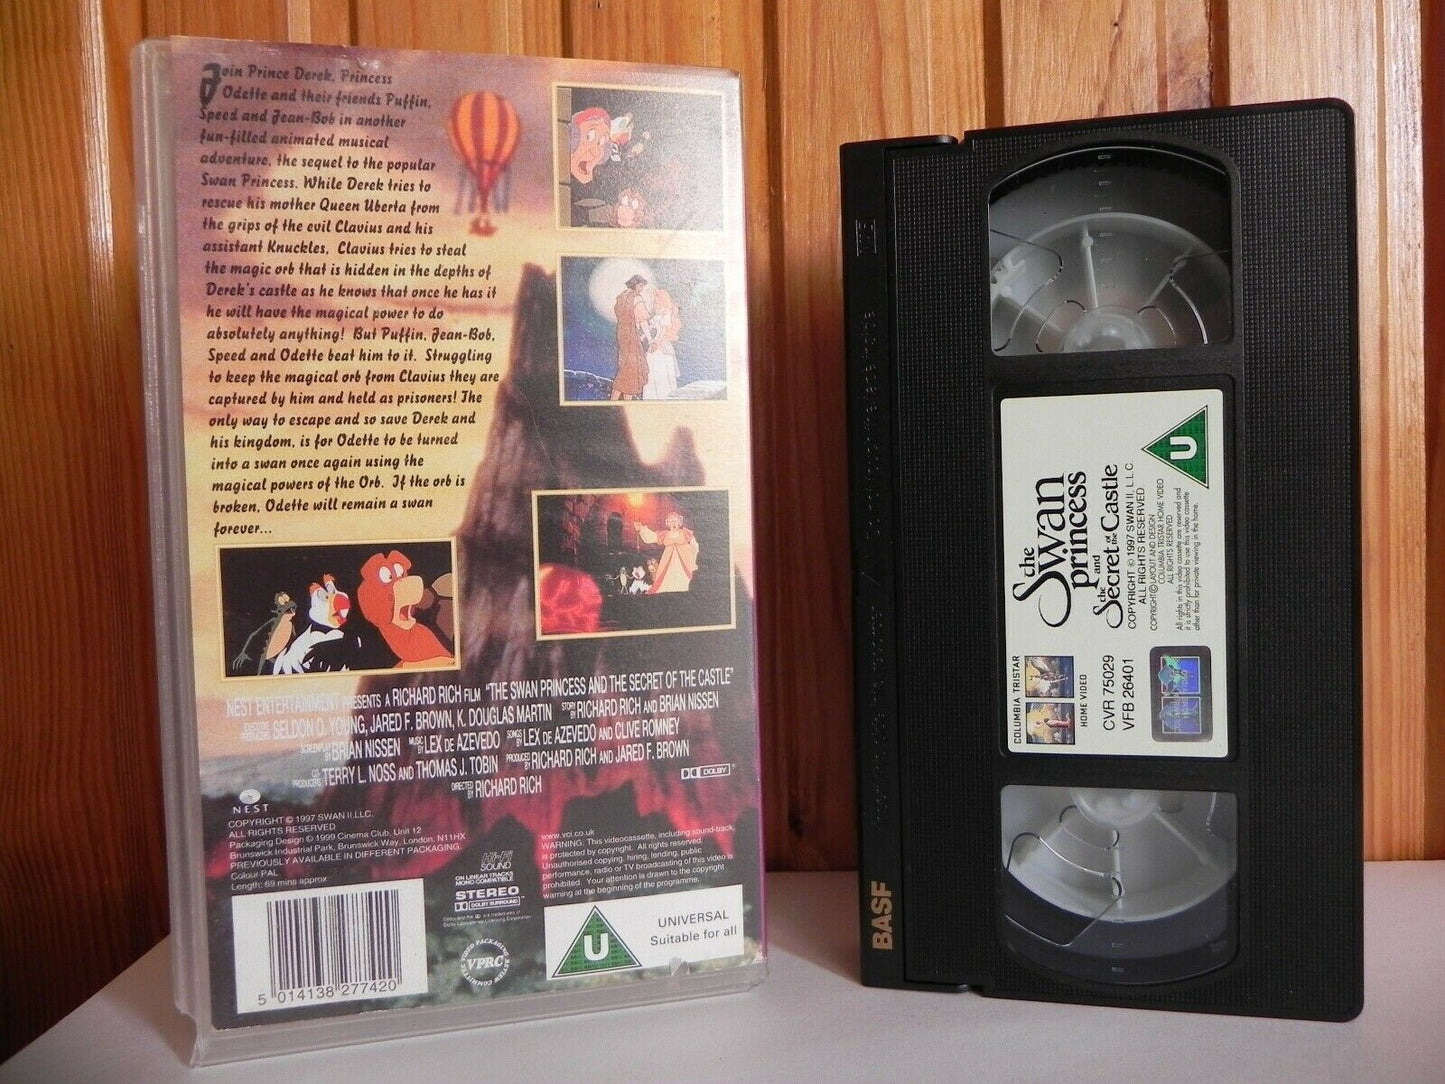 The Swan Princess 2: Escape From Mountain Castle (1997) - Vintage Children's VHS-